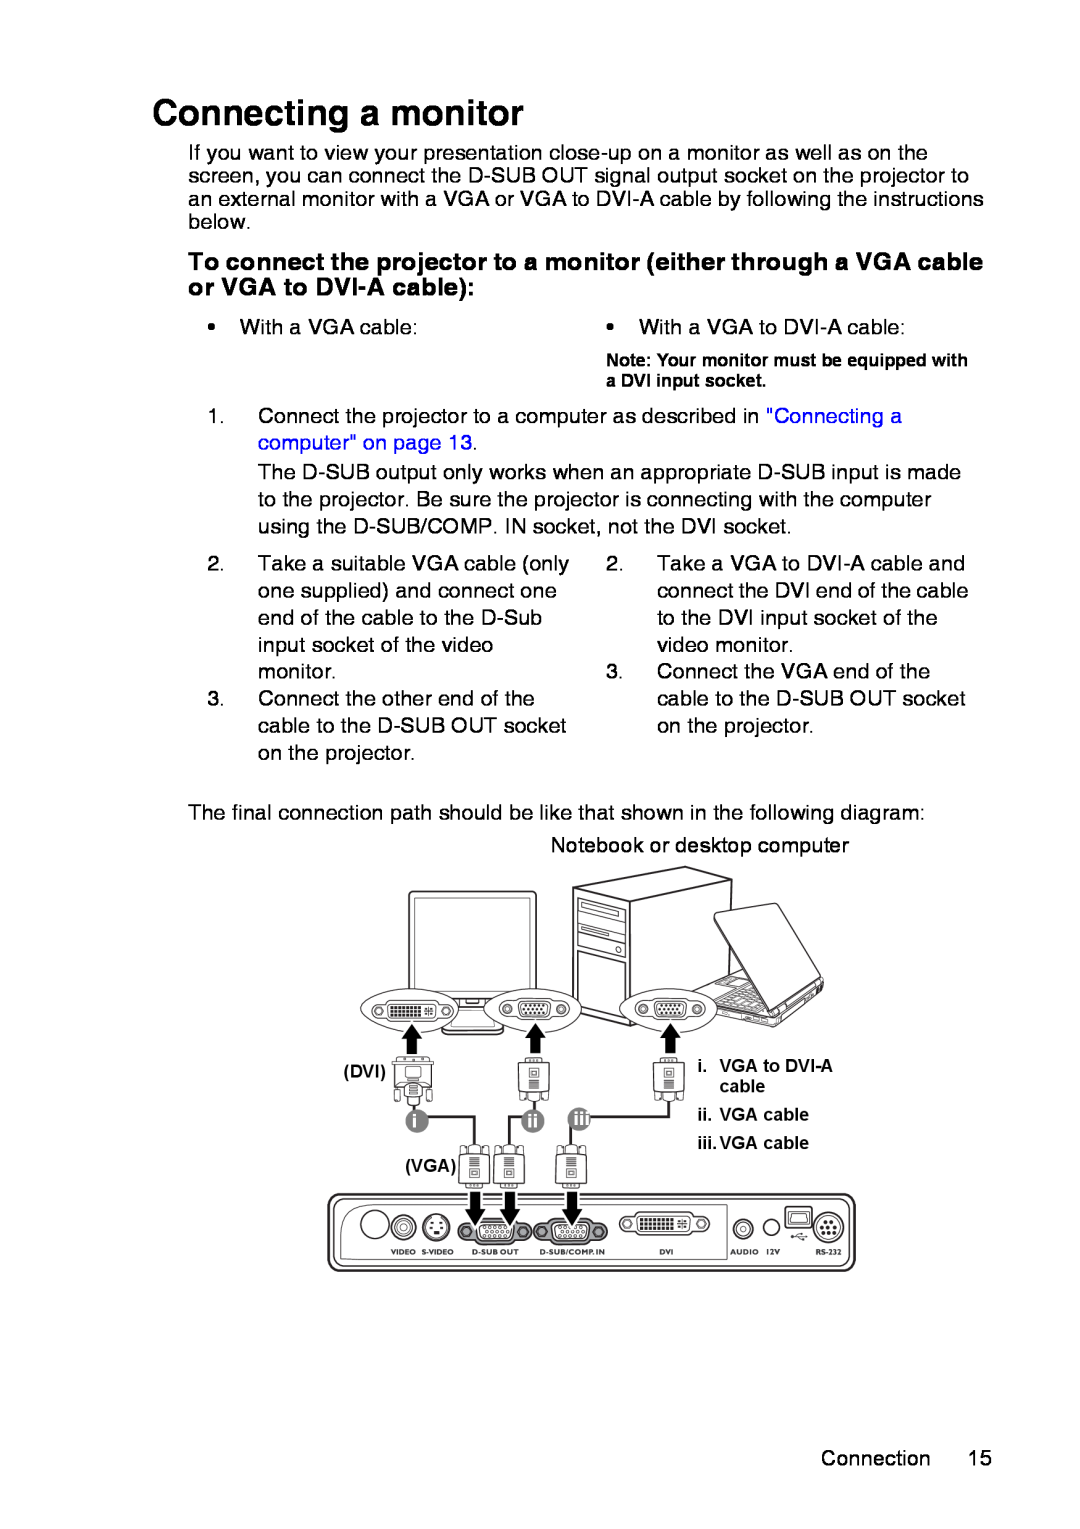 InFocus XS1 manual Connecting a monitor, a DVI input socket, i. VGA to DVI-A cable ii. VGA cable iii. VGA cable 